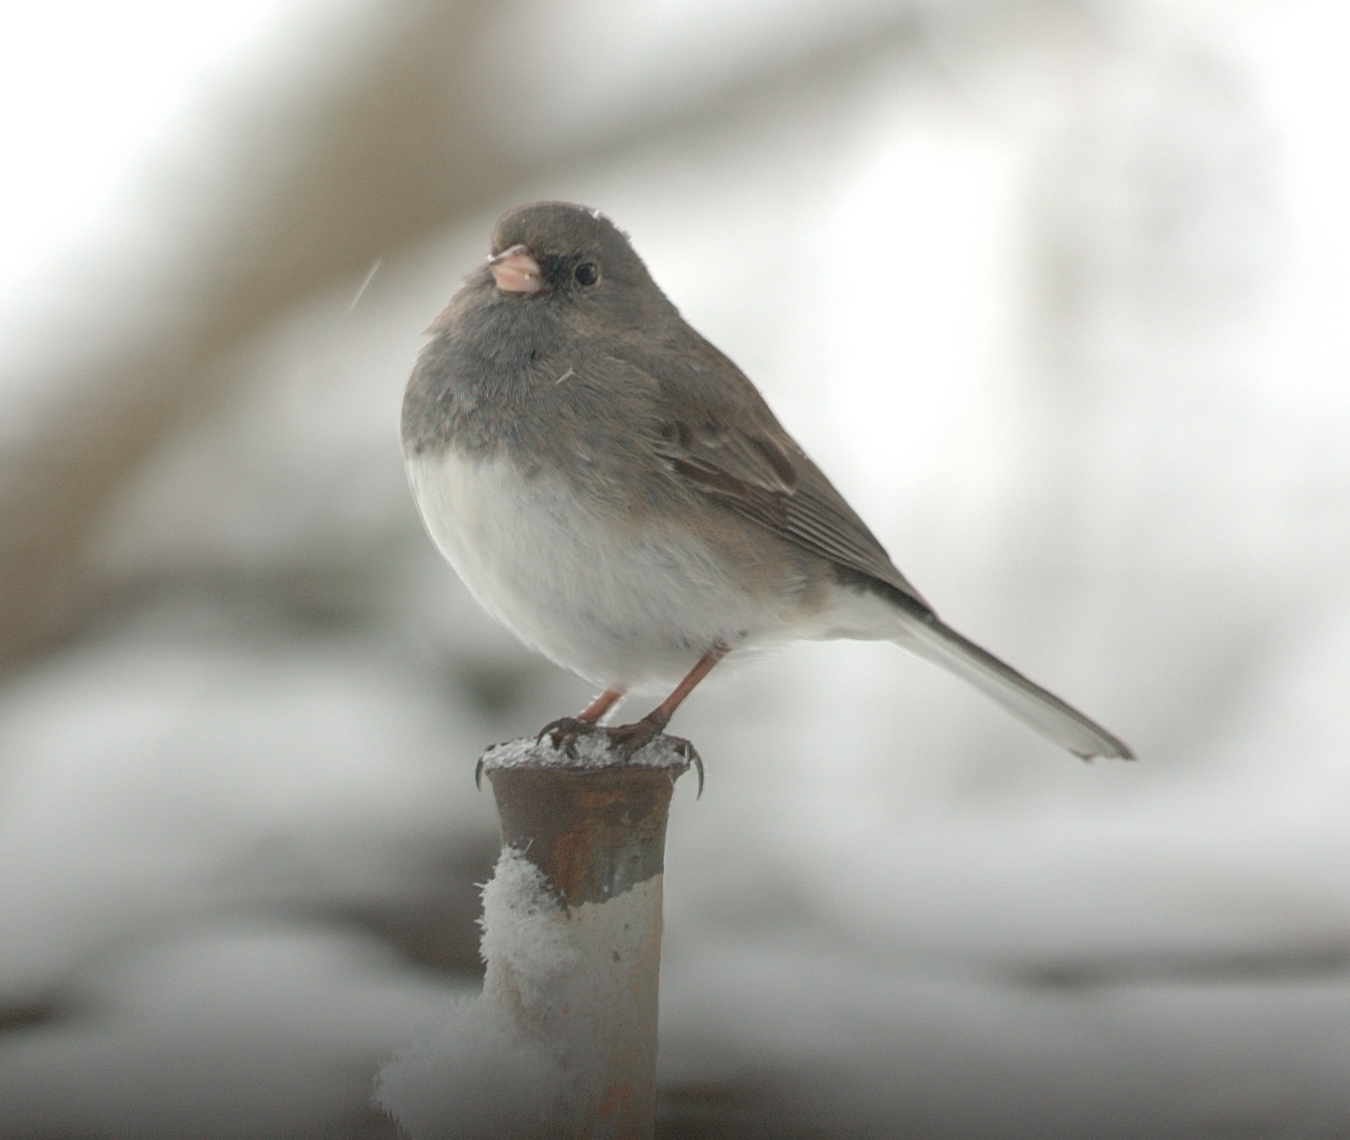 Snow Birds New York S Winter Bird Population New York State Parks Blog,Korean Toasted Sesame Seeds